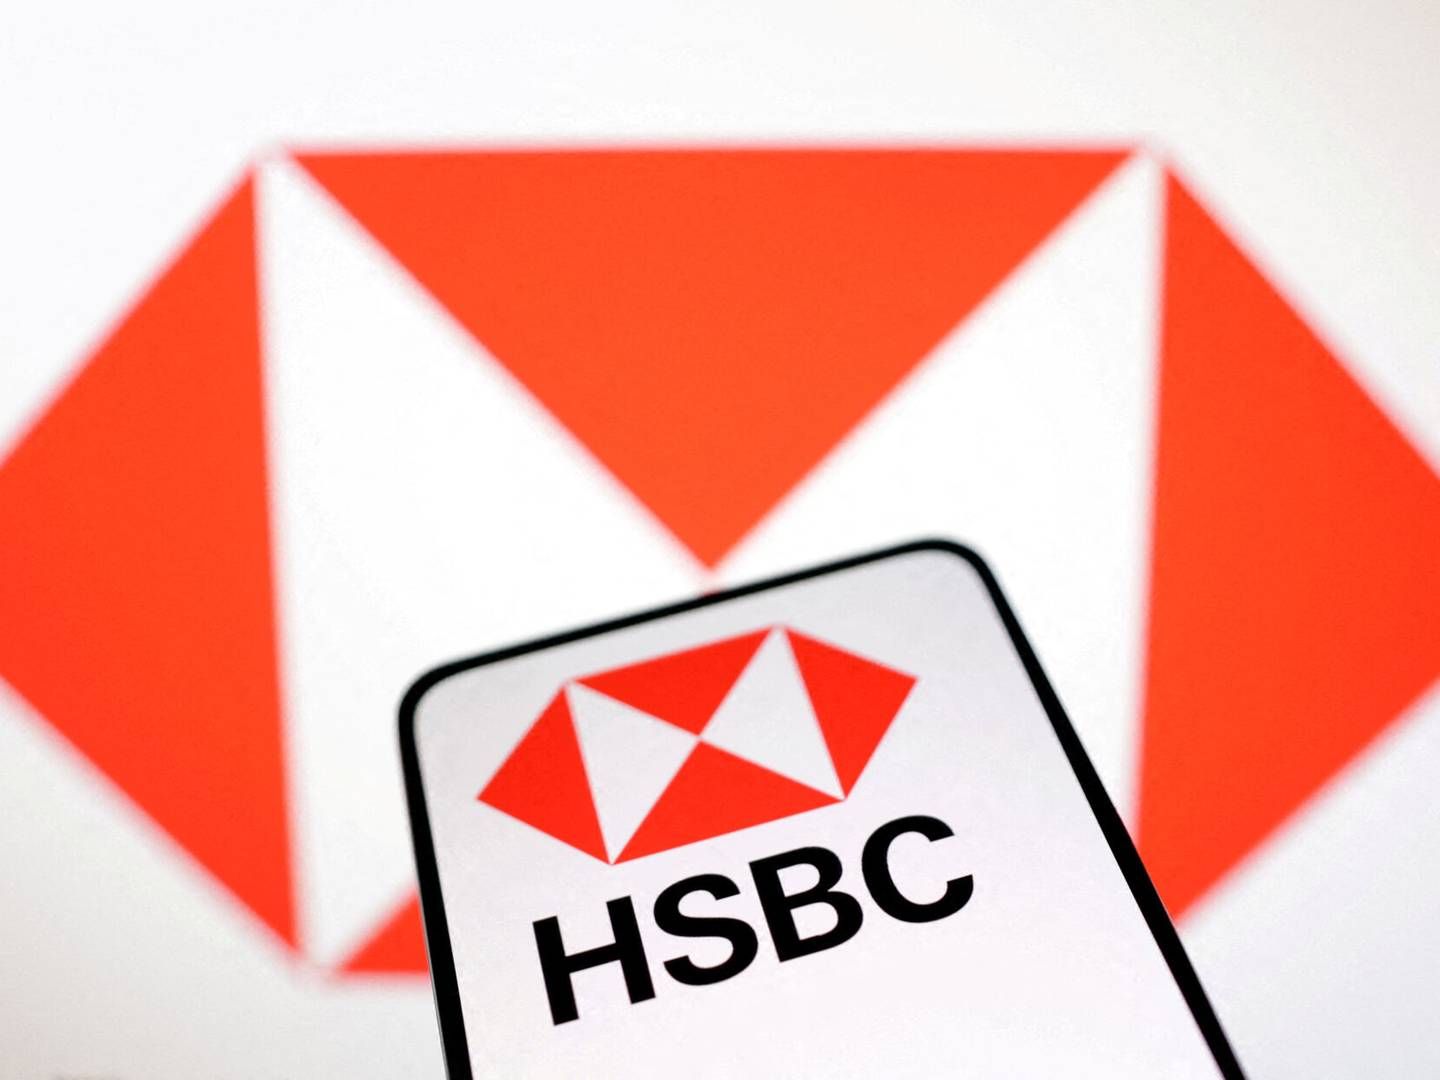 Investeringsbanken HSBC vil lancere betalingsapp. Arkivfoto Dado Ruvic/Reuters/Ritzau Scanpix